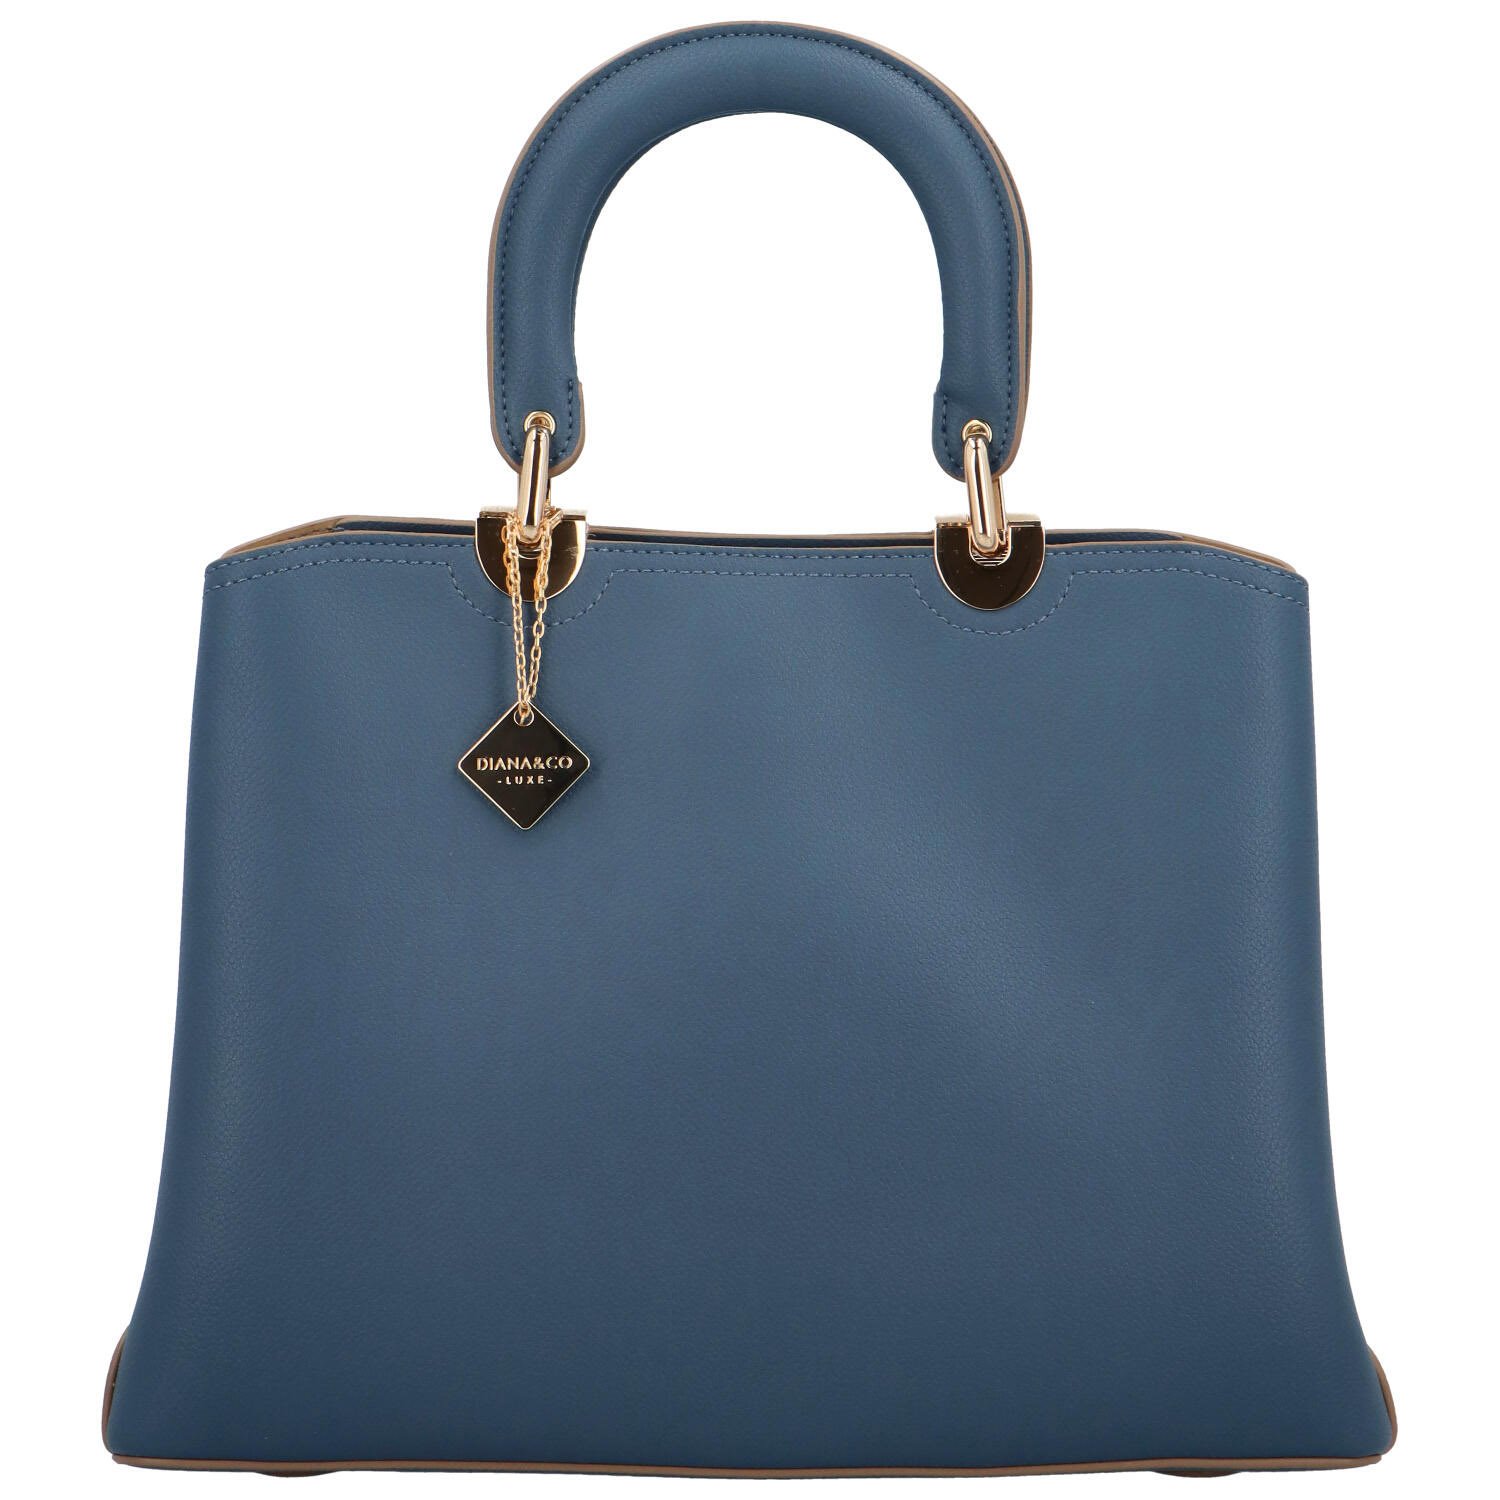 Dámská kabelka do ruky modrá - Diana & Co Reína modrá